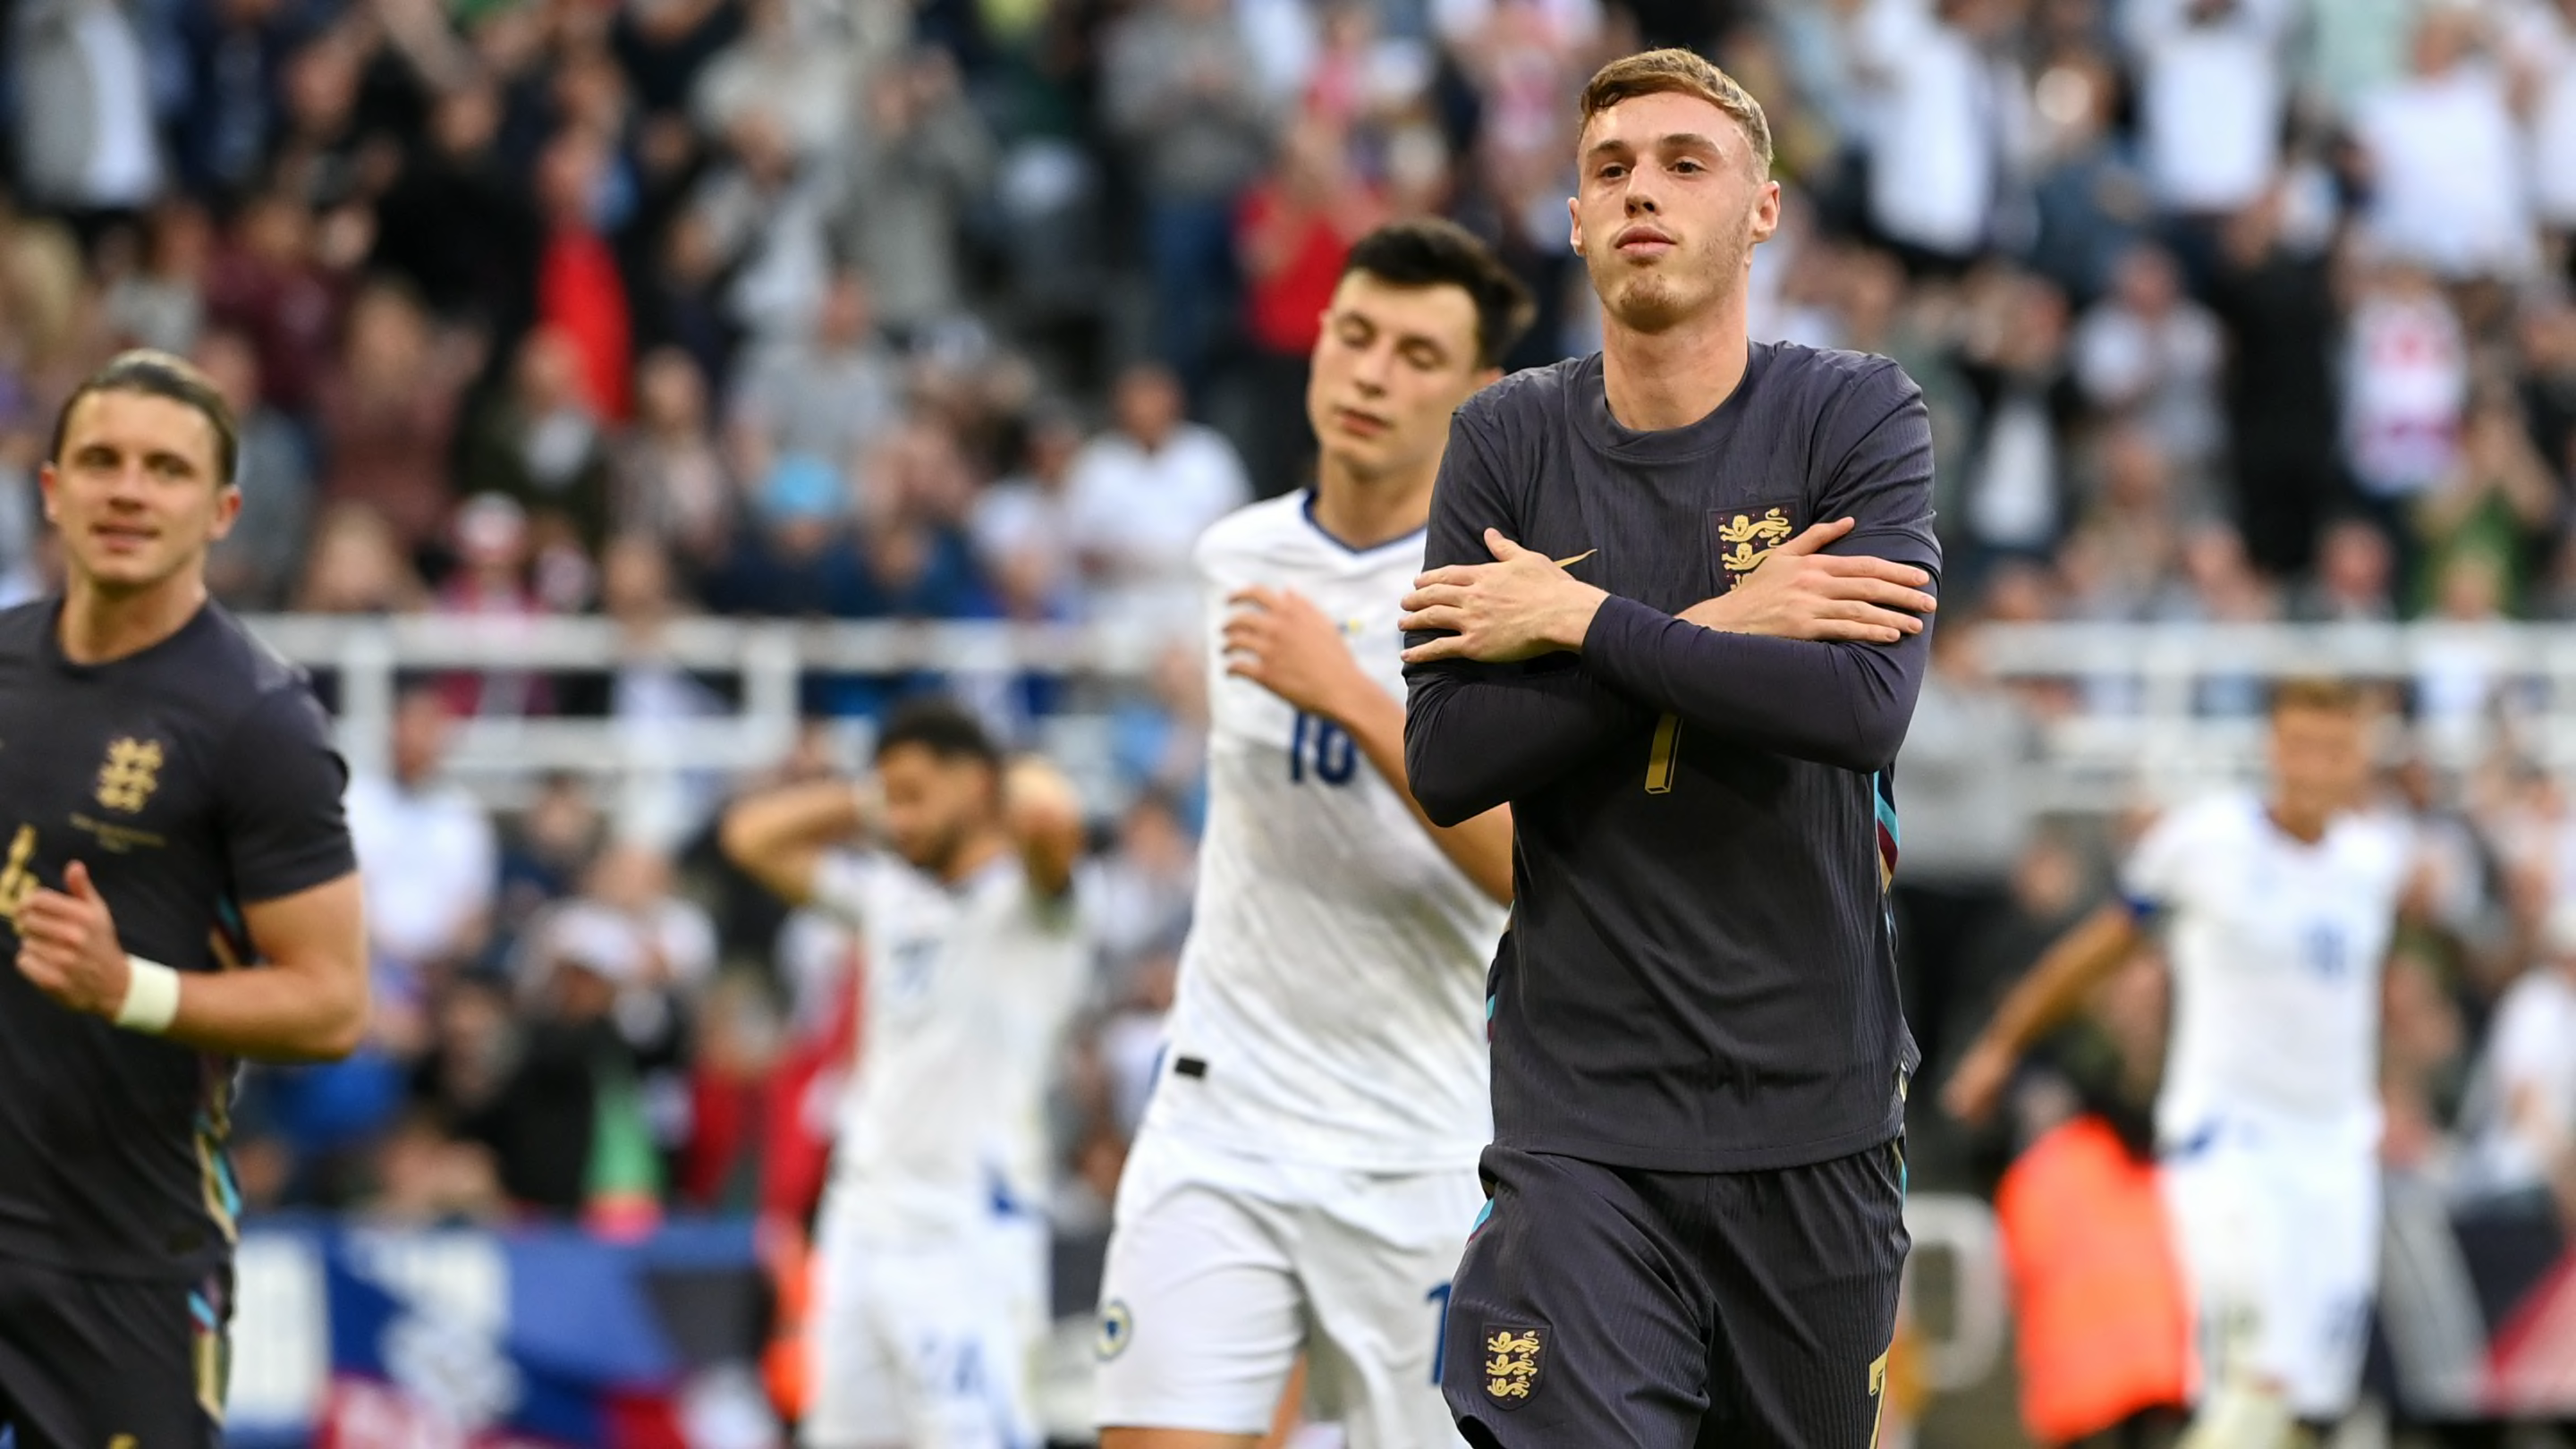 England 3-0 Bosnia and Herzegovina: Player ratings as Palmer scores first international goal